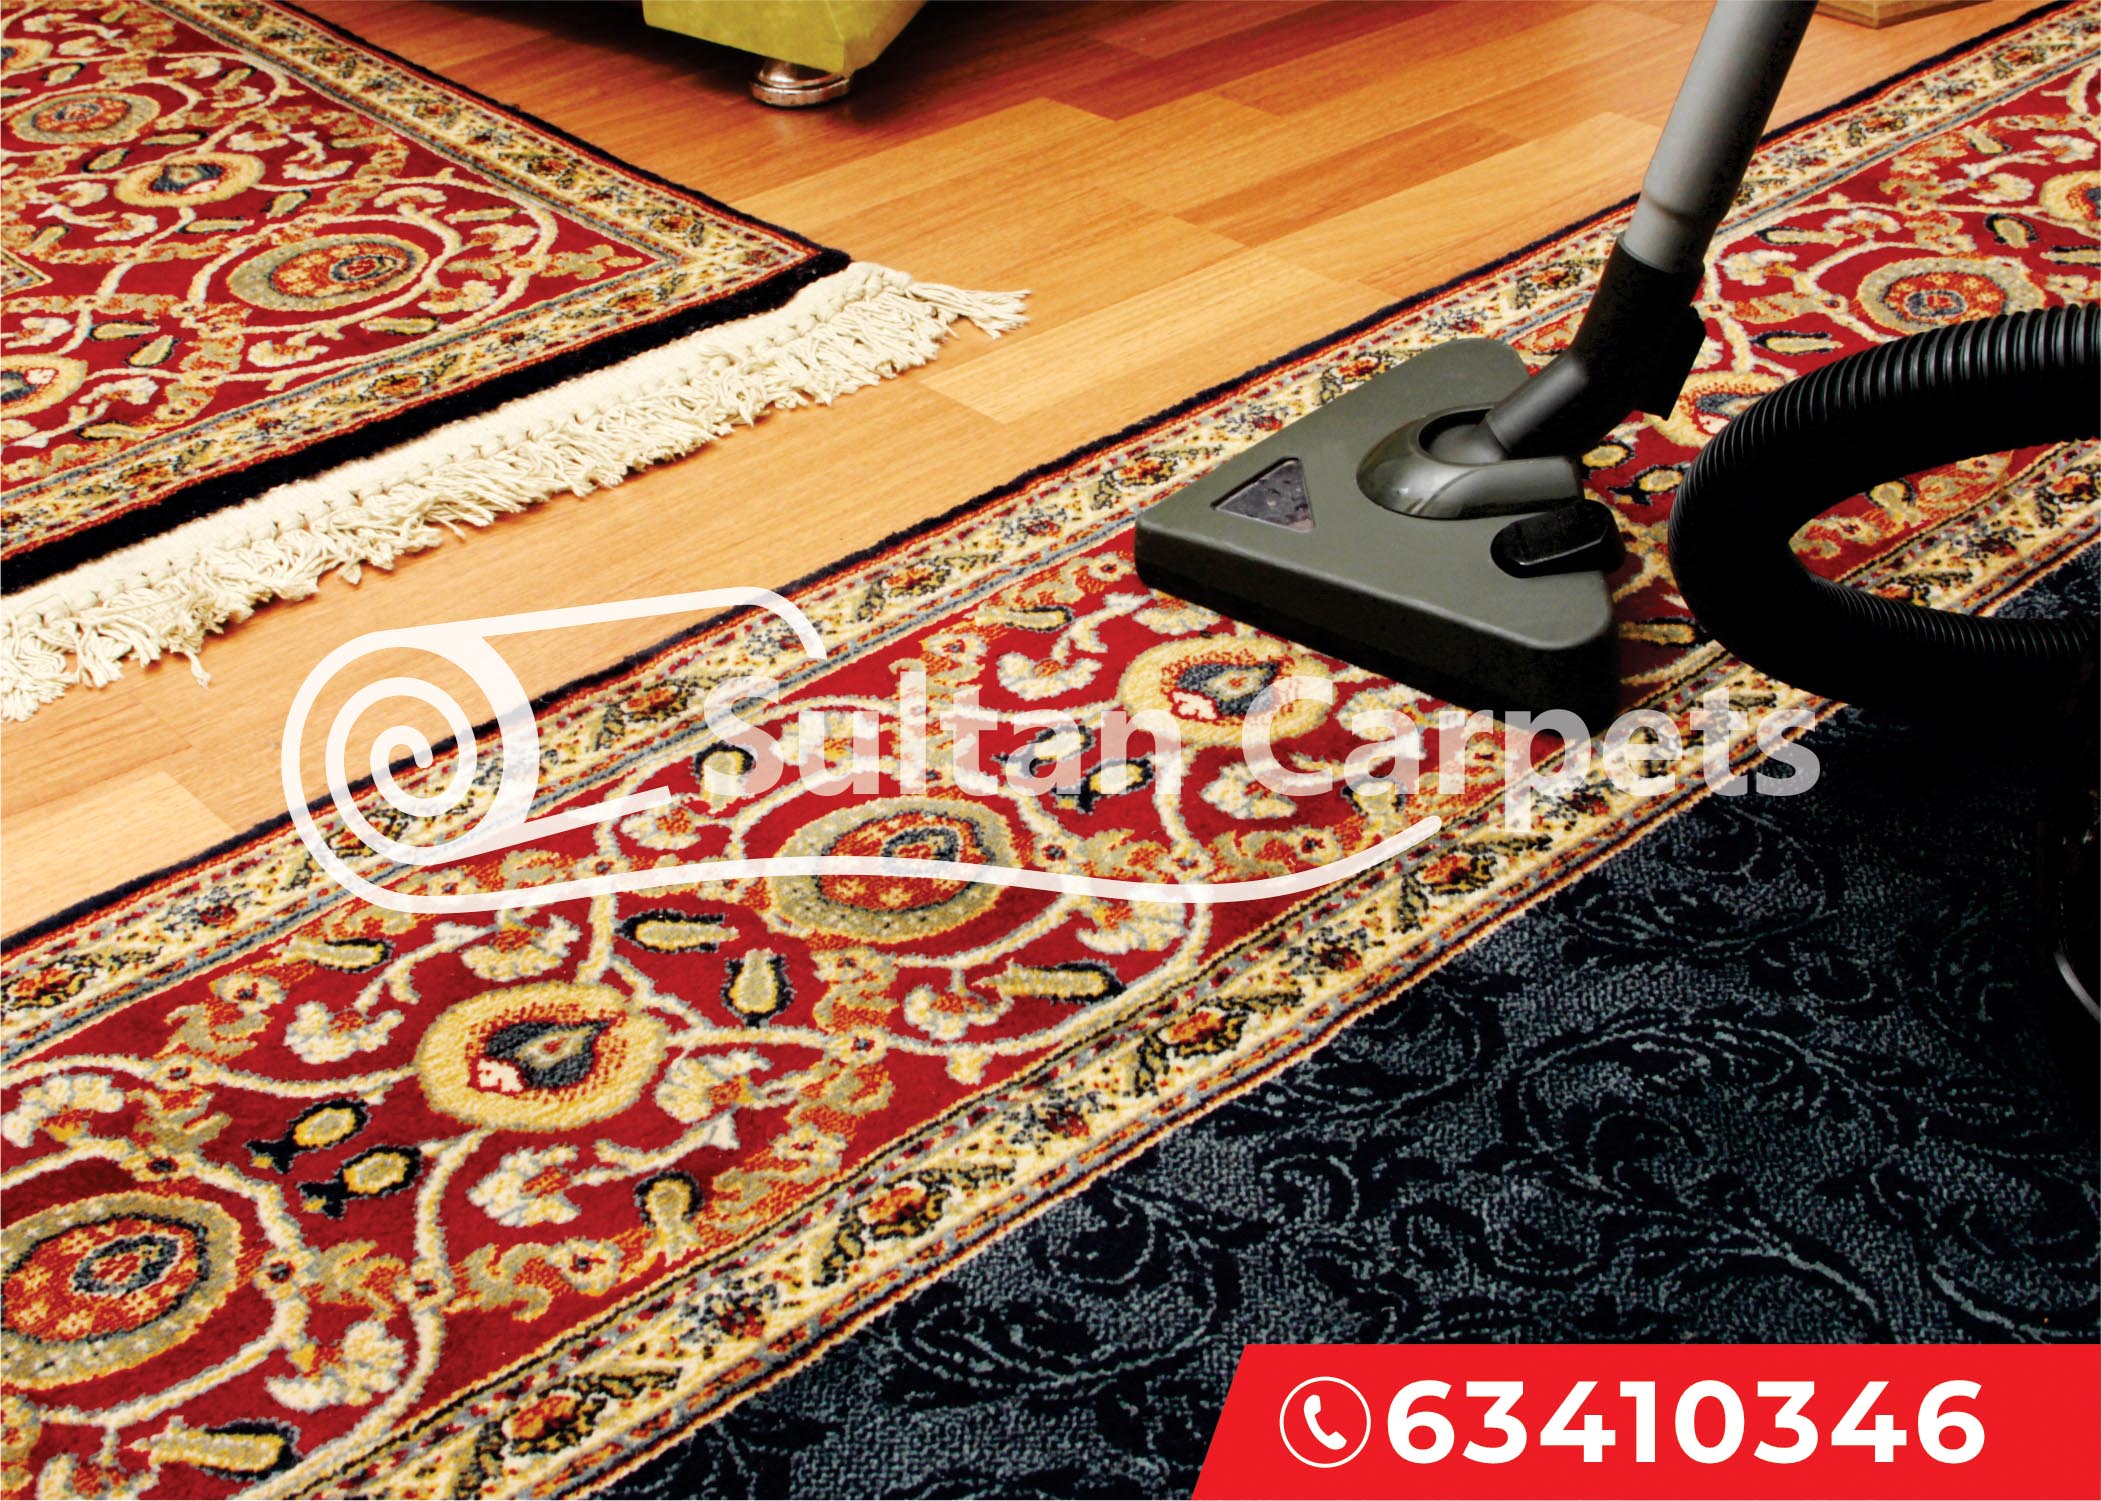 DIY carpet cleansing points